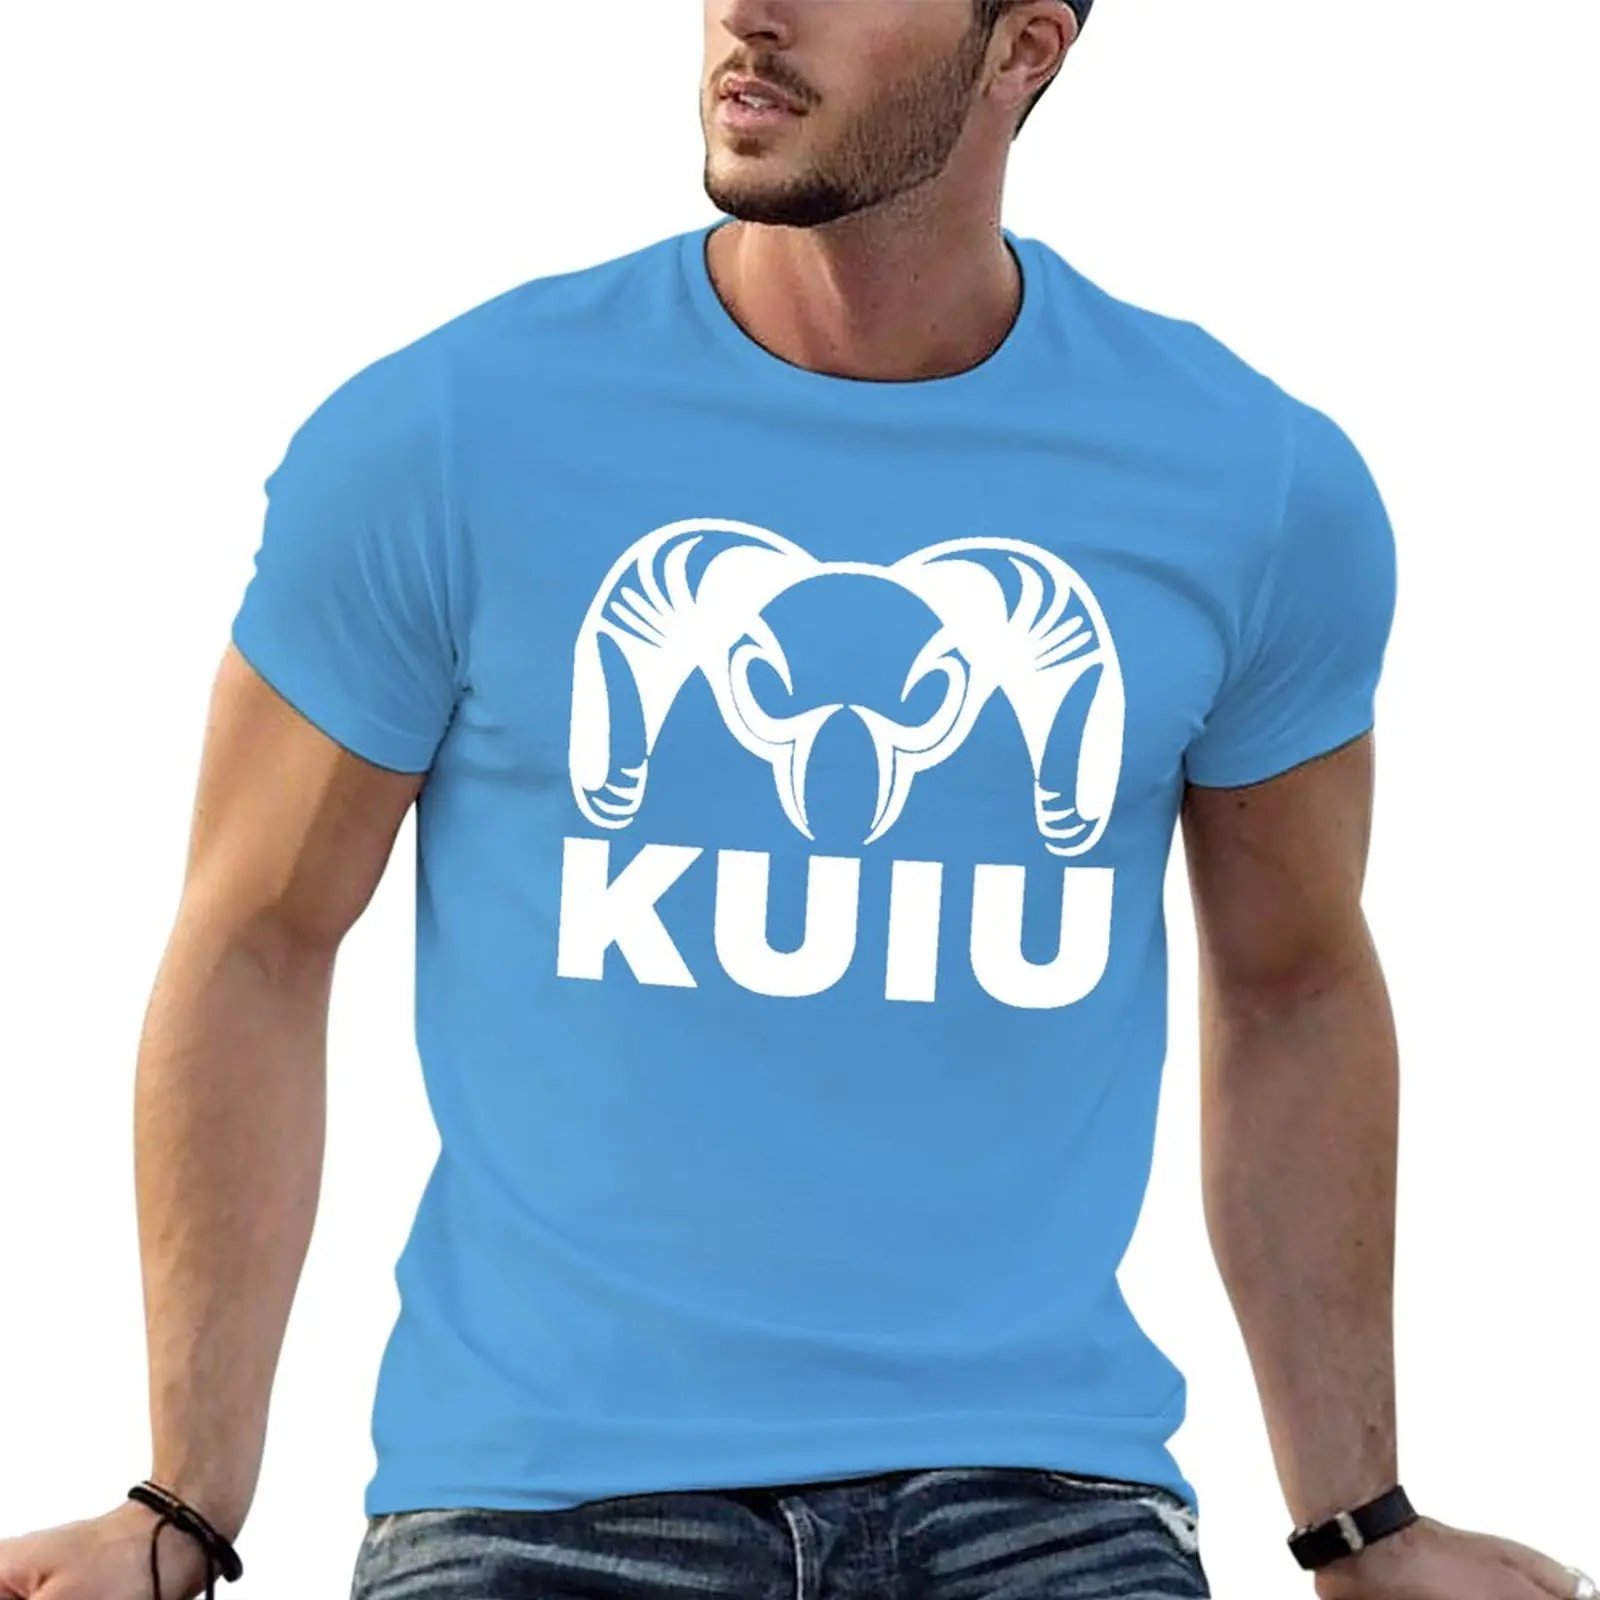 Kuiu-Camiseta de anime para hombre, ropa de caza, camisetas gráficas,  paquete, nuevo - AliExpress